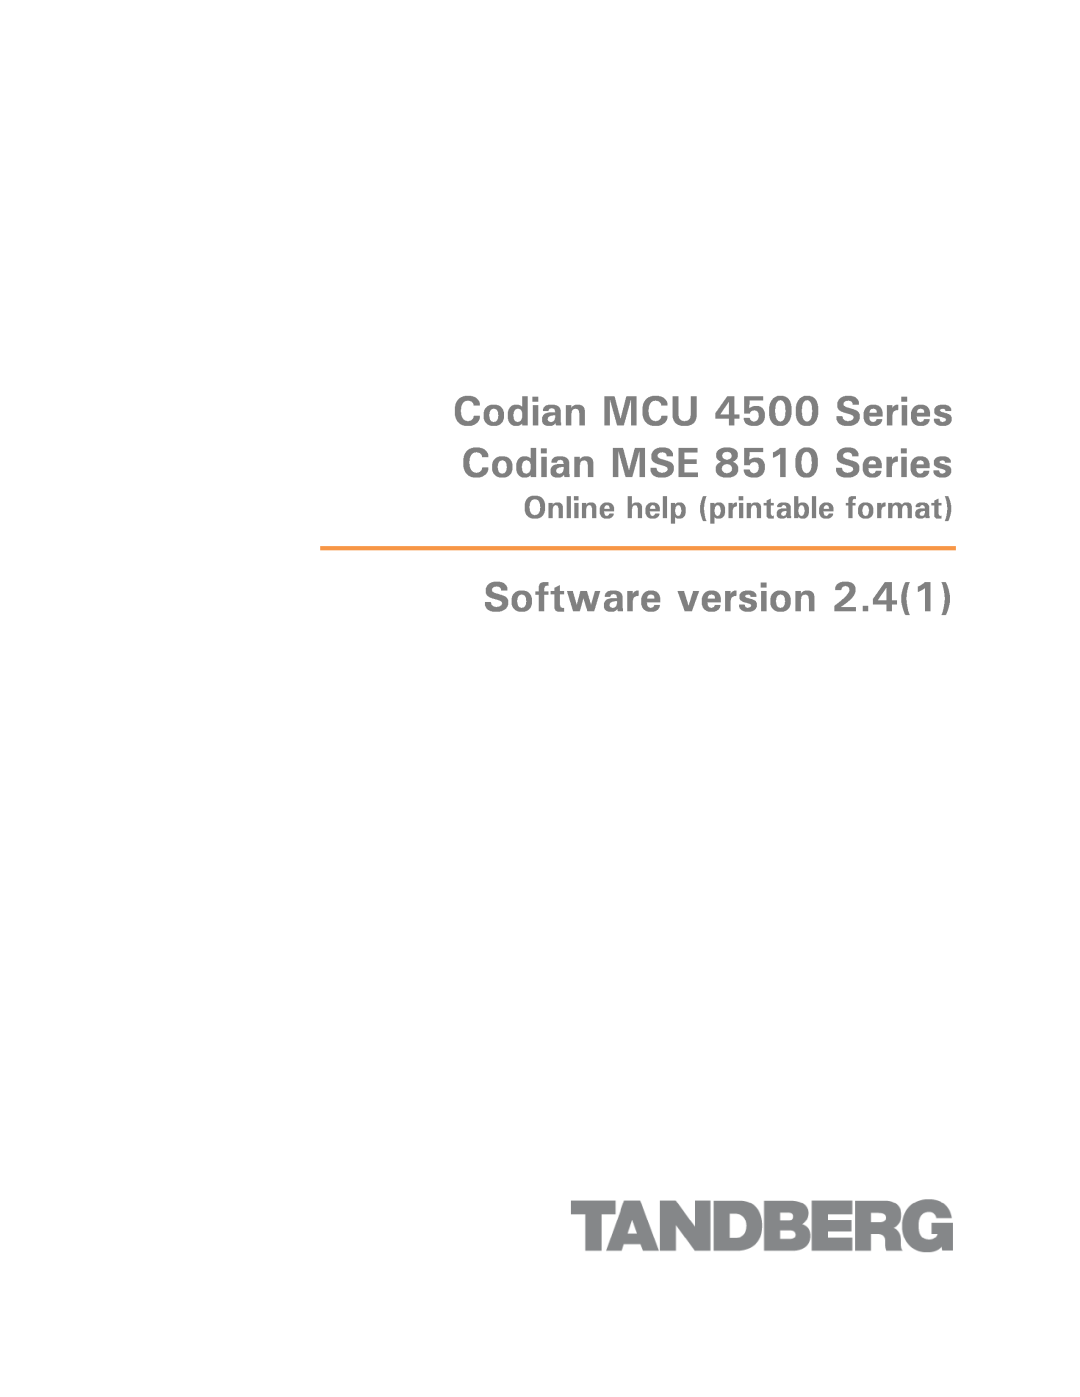 TANDBERG manual Codian MCU 4500 Series Codian MSE 8510 Series, Software version, Online help printable format 